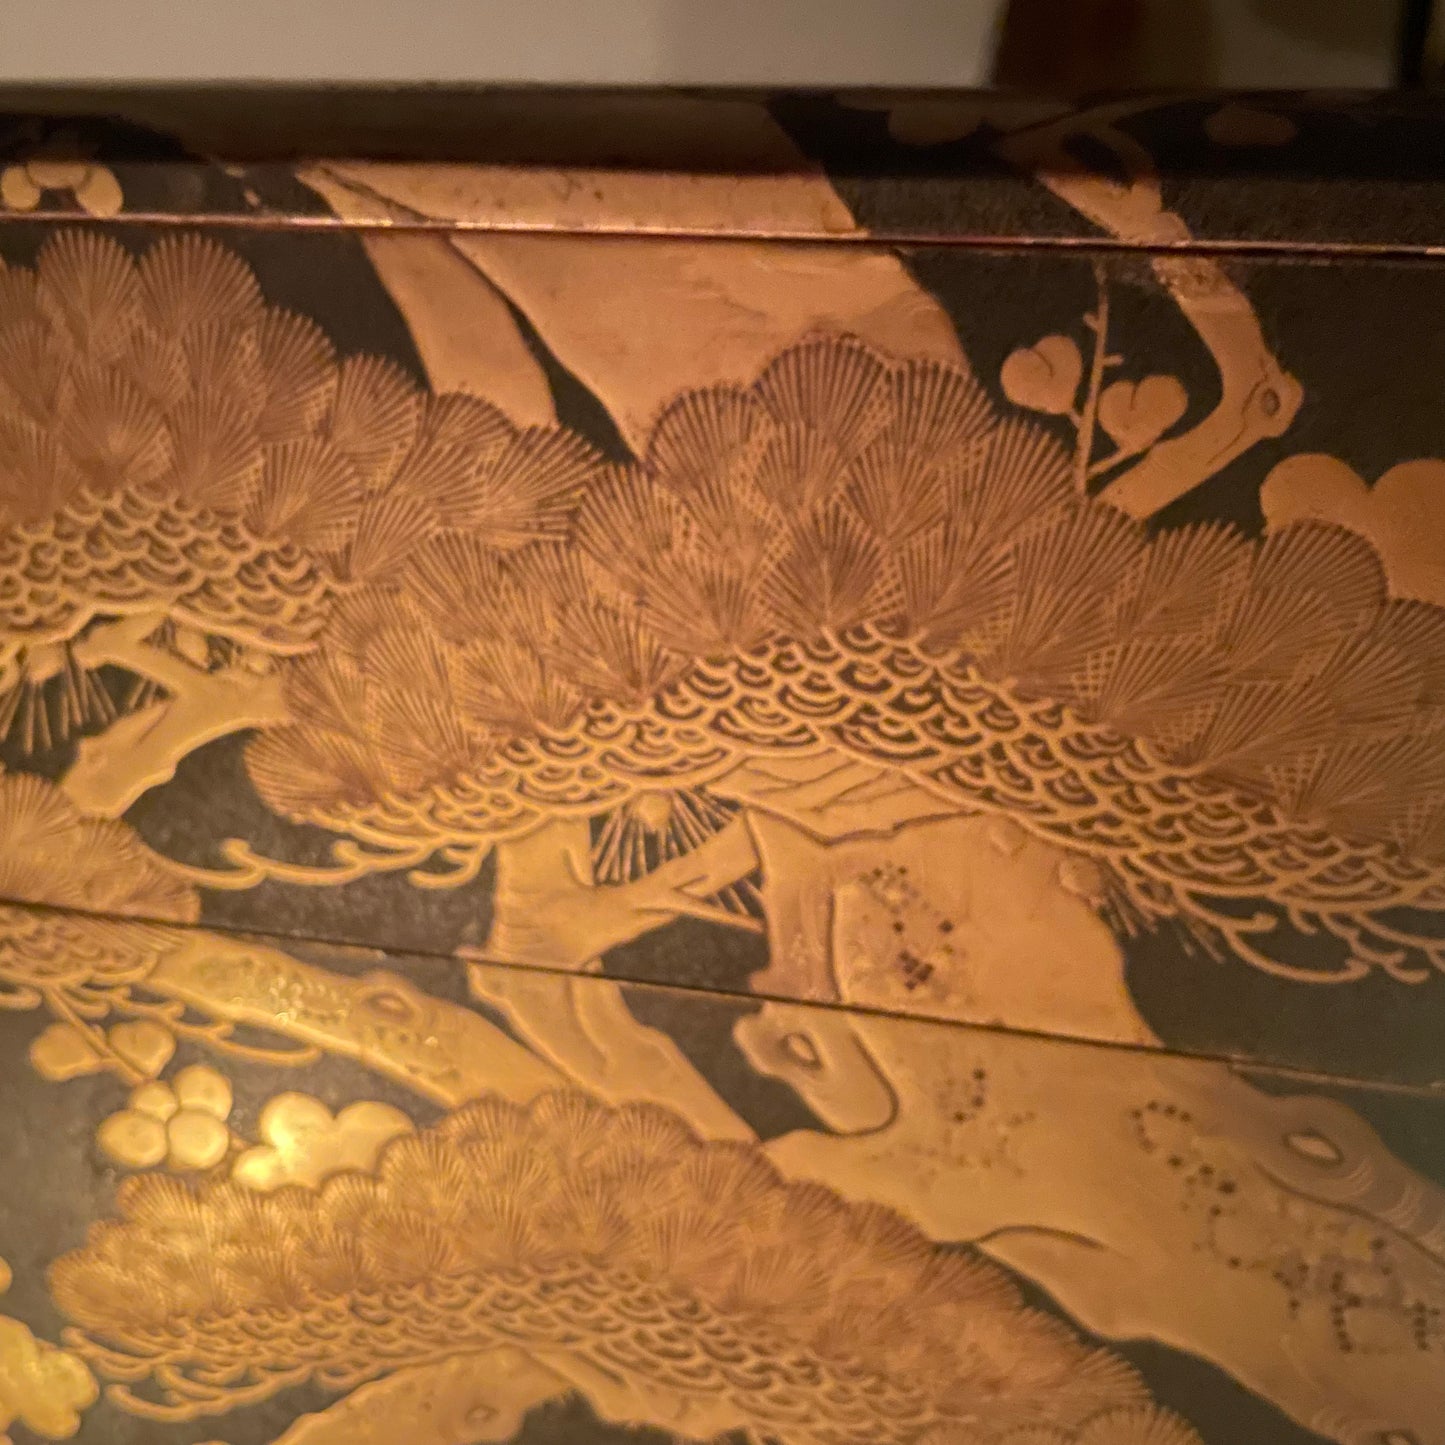 Antique Japanese Early Edo c.1600's 5 Layer Lidded Lacquer Makie Jubako Bento Box w/ Documentation